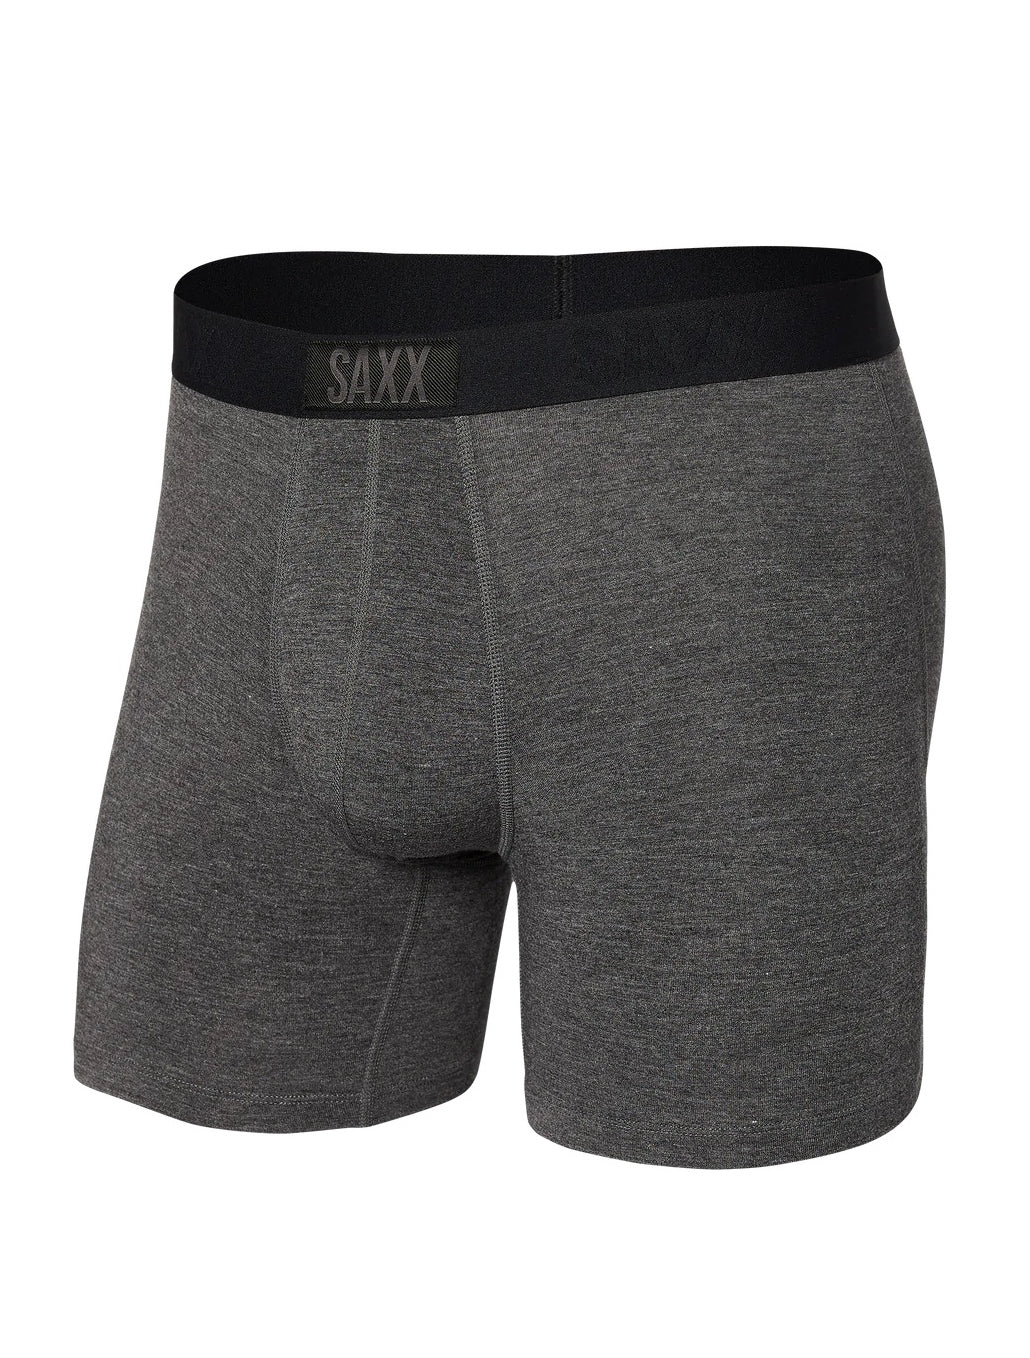 SAXX Underwear Vibe Boxer Modern Fit Salt and Pepper – Whisper